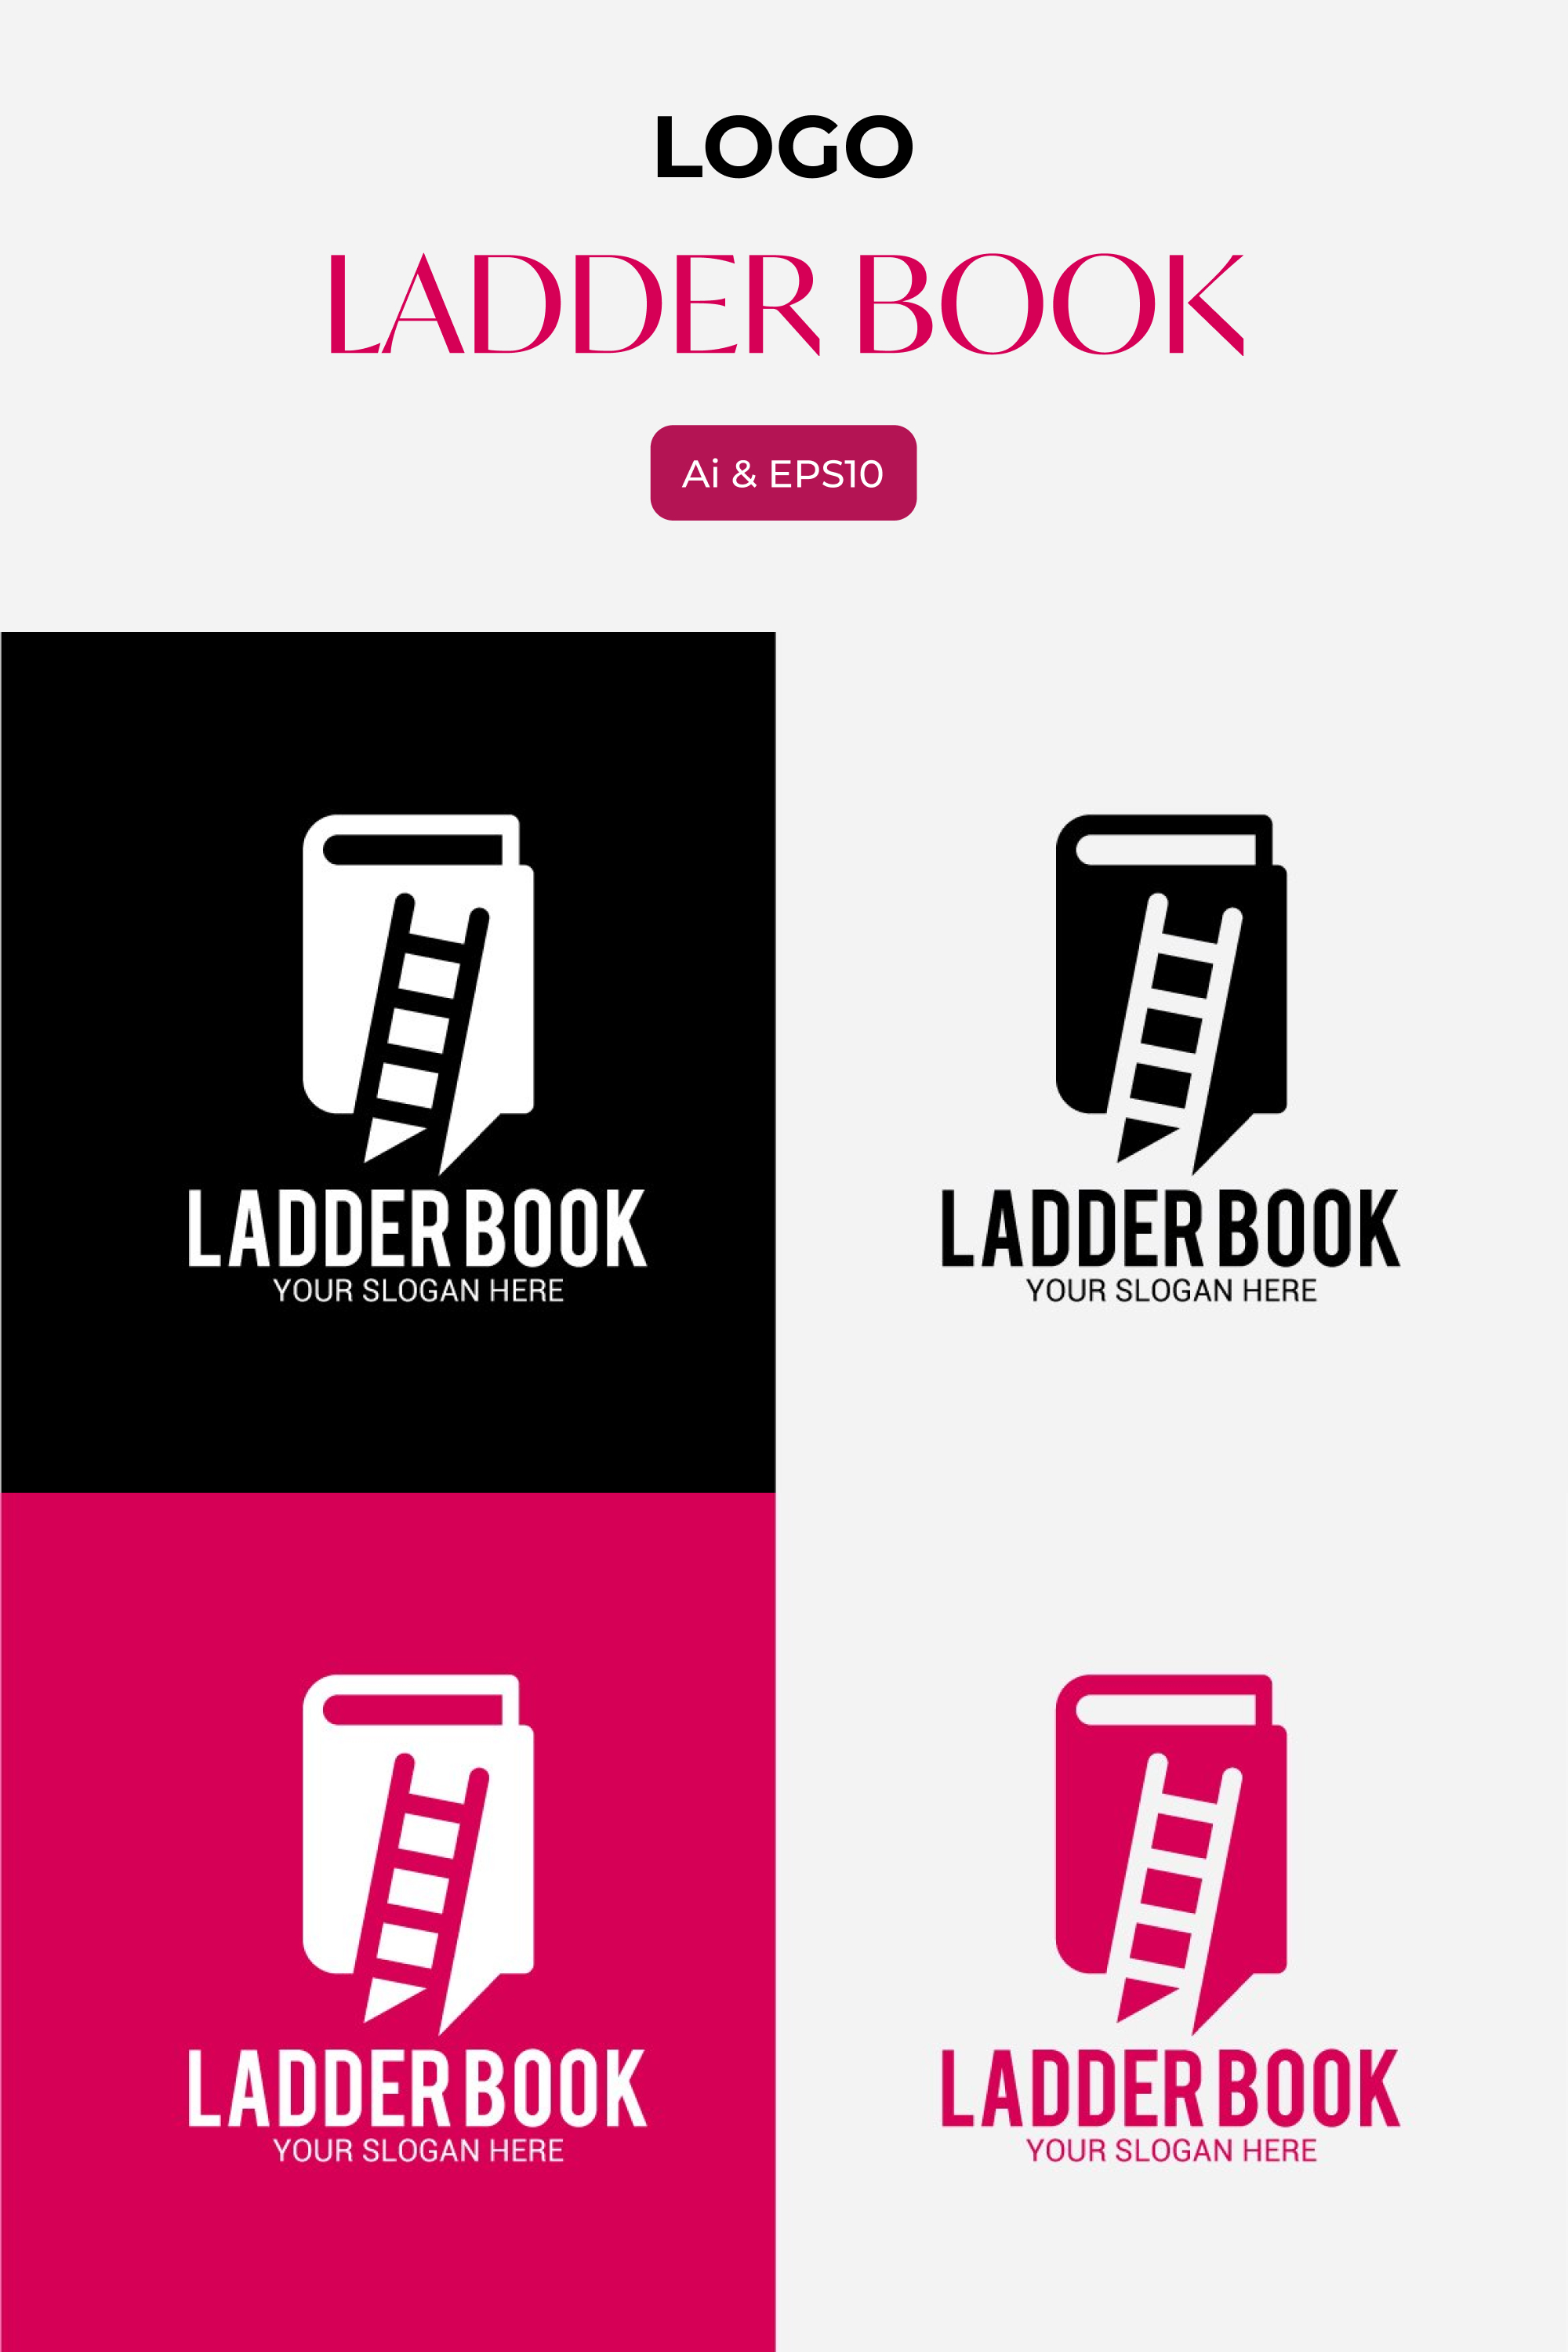 Ladder book logo of pinterest.